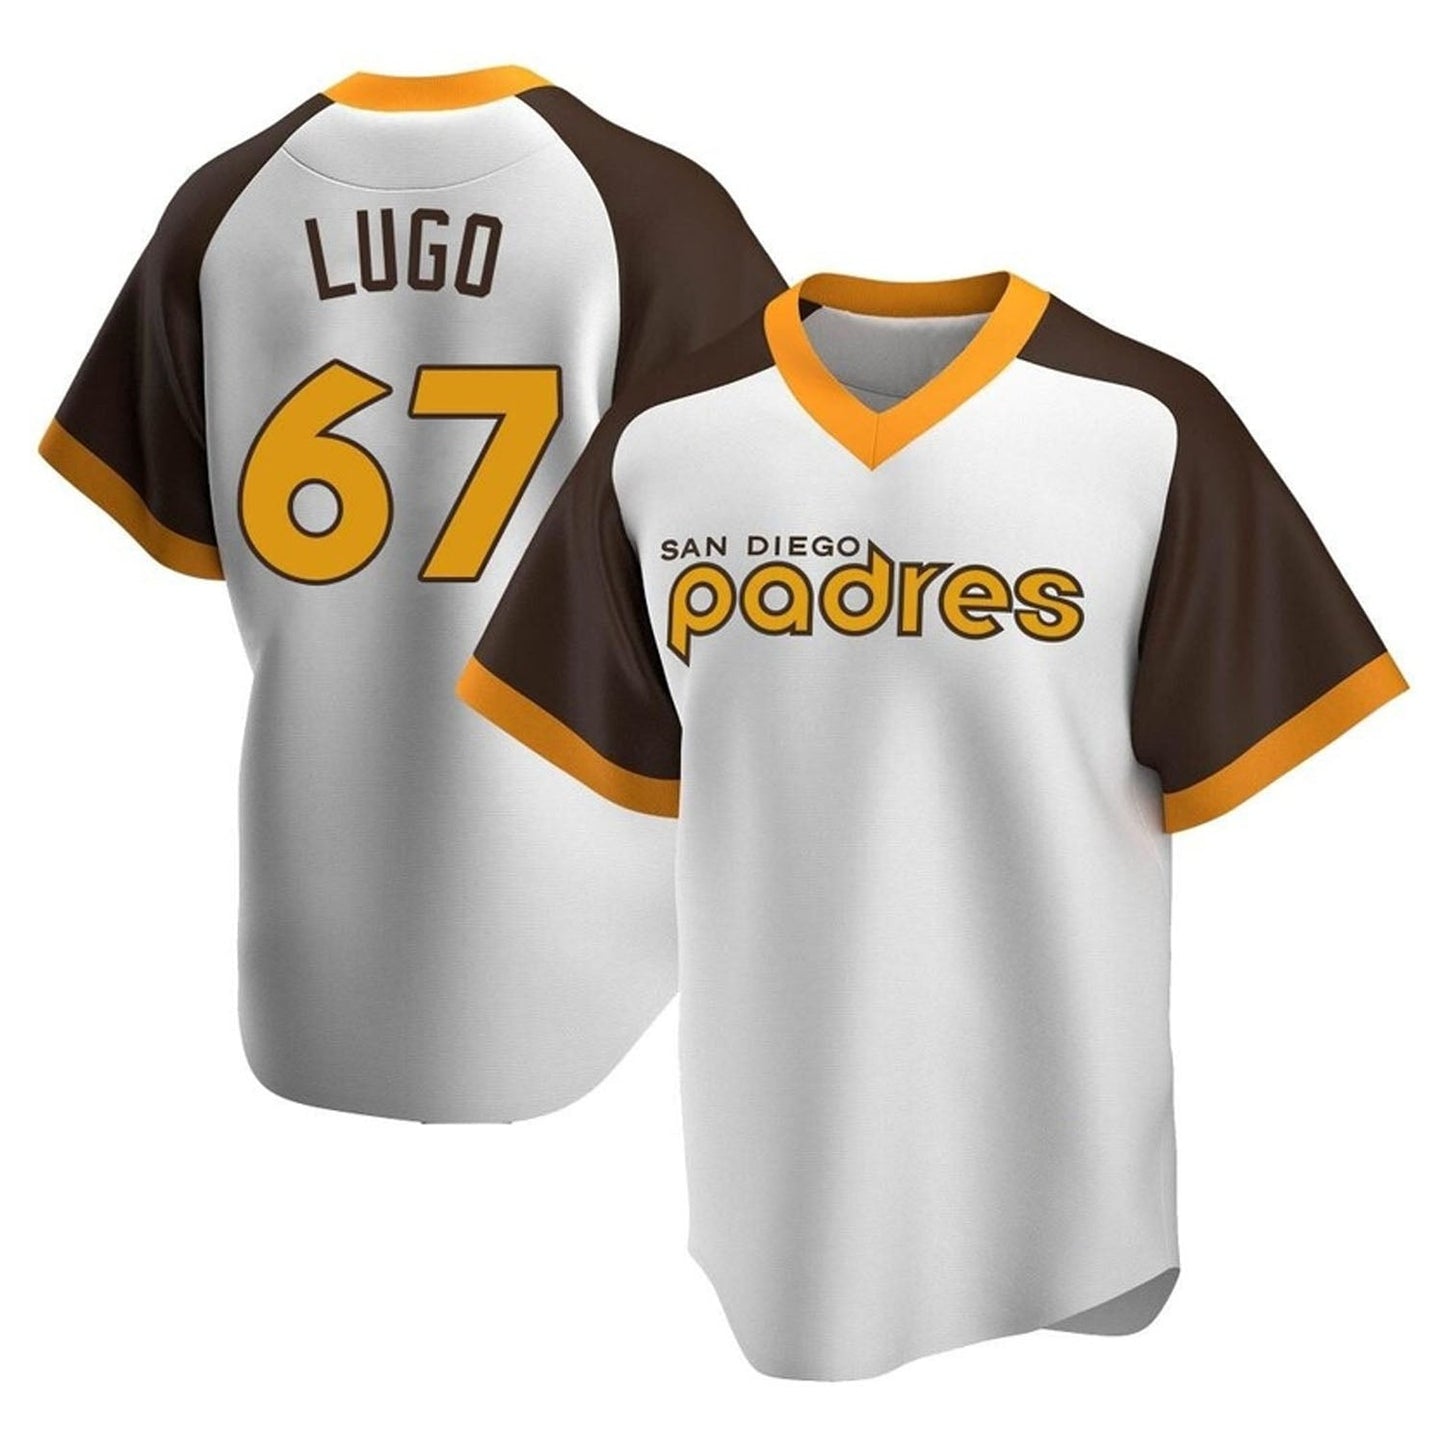 MLB Seth Lugo San Diego Padres 67 Jersey